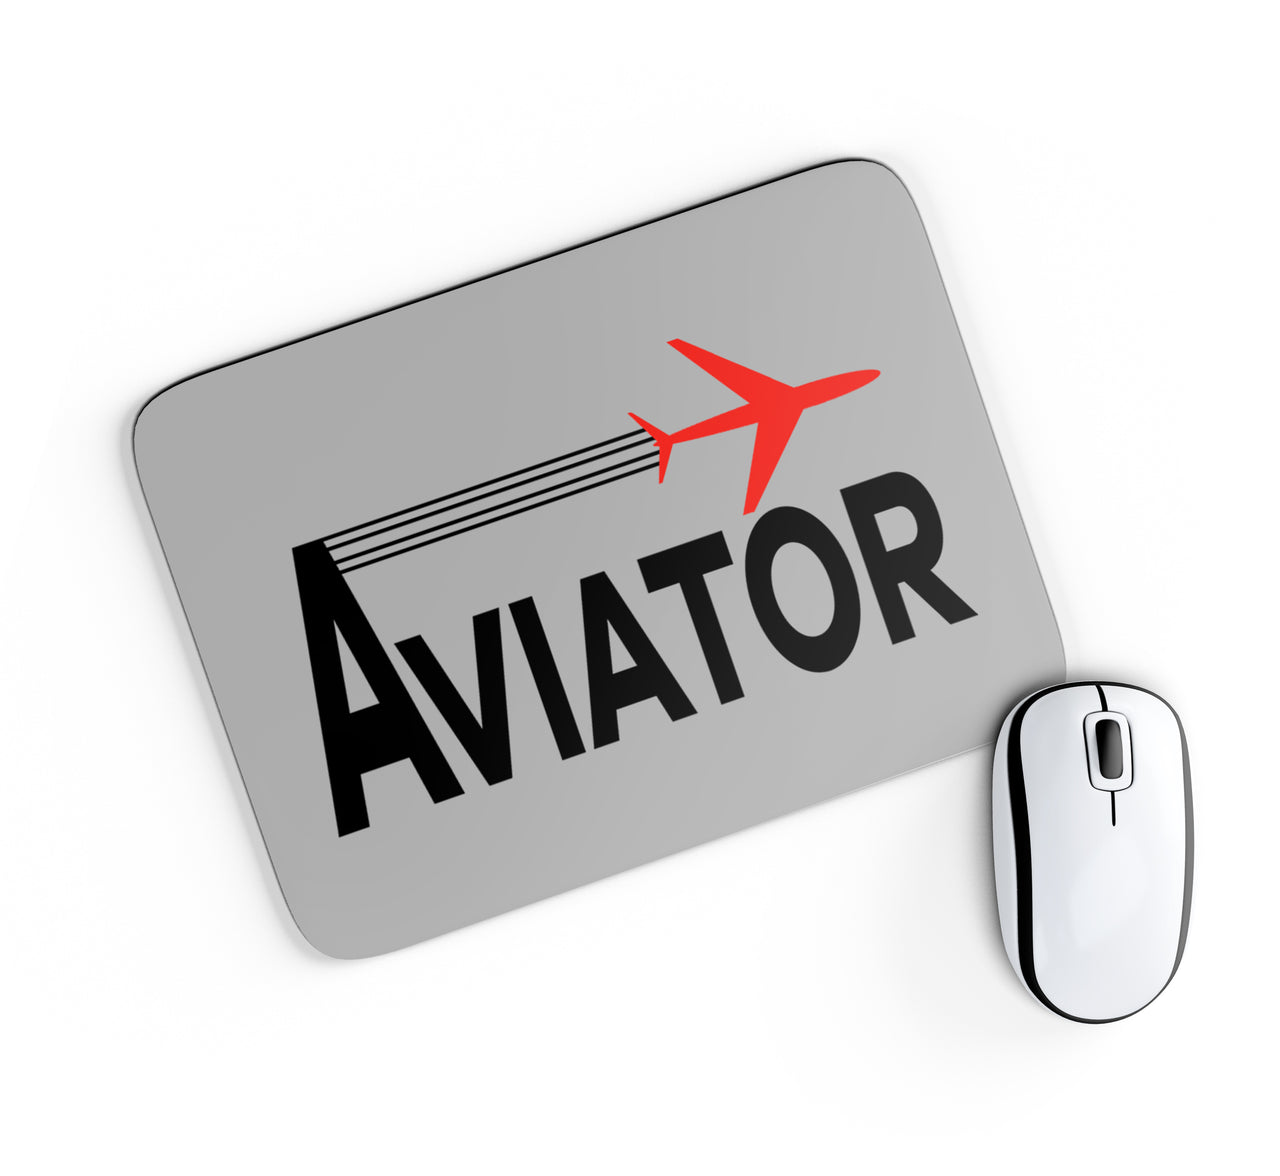 Aviator Designed Mouse Pads